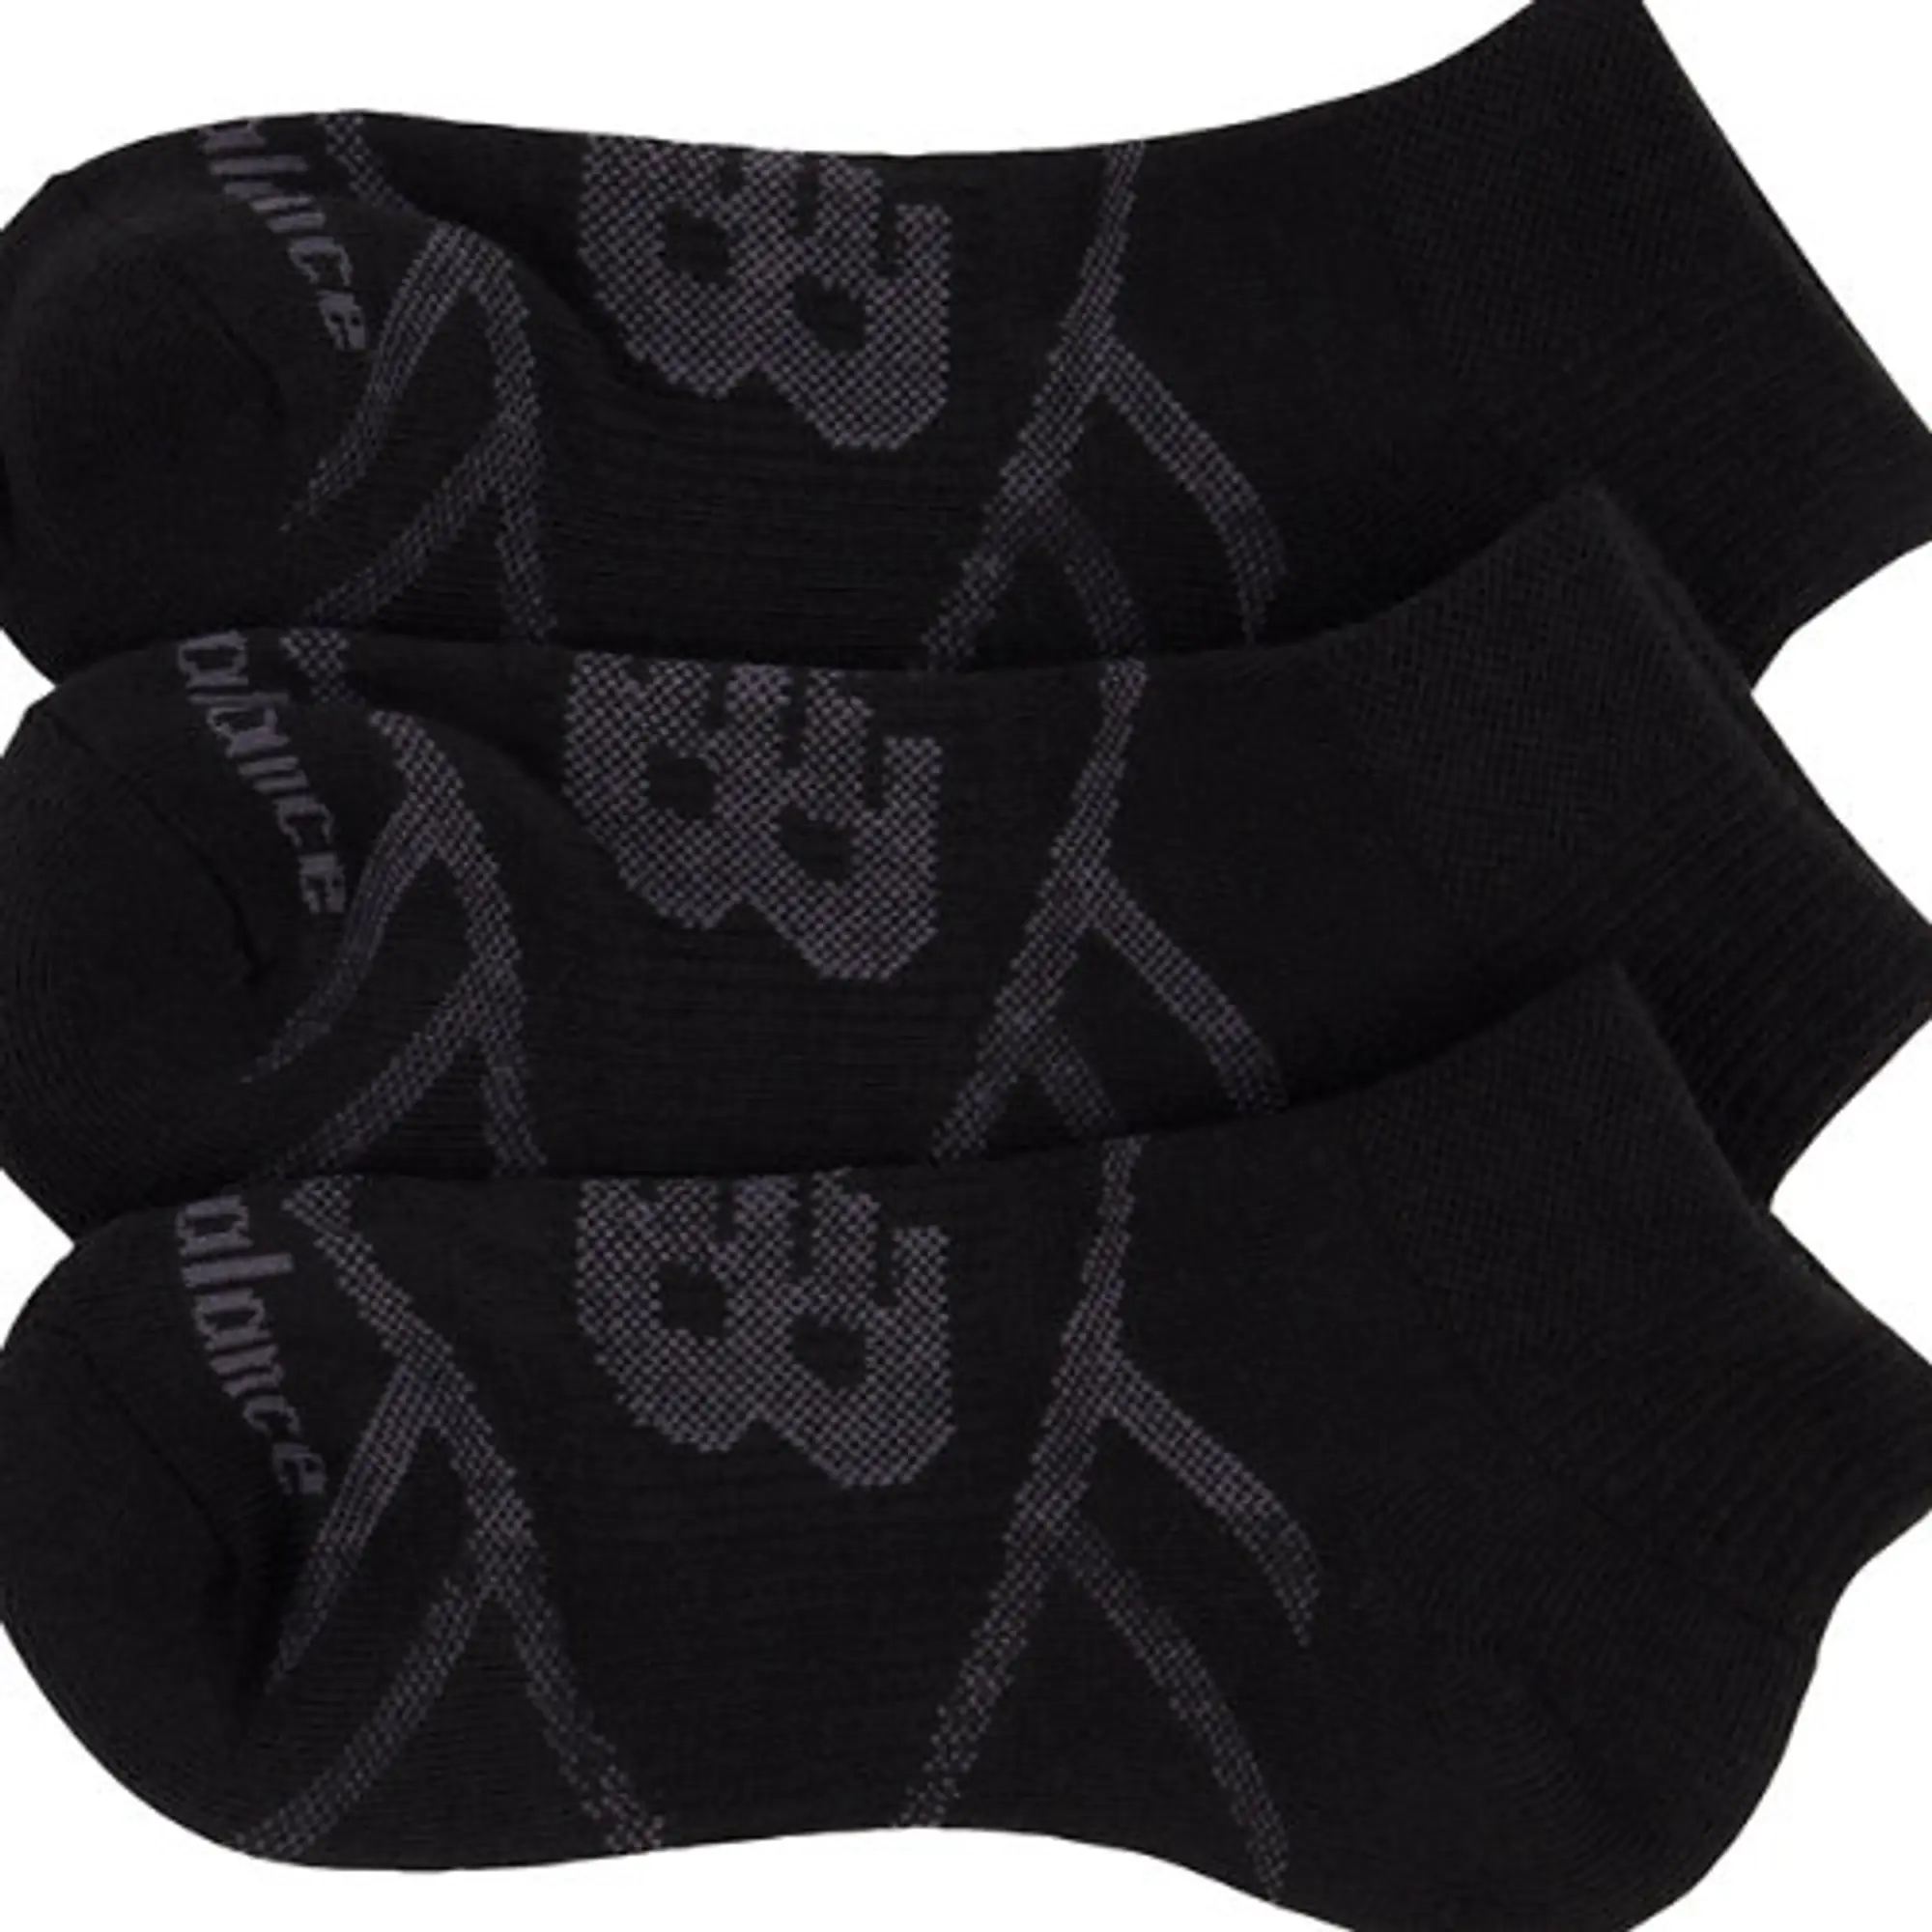 New Balance 3 Pack Patterned Ankle Socks Juniors - Black